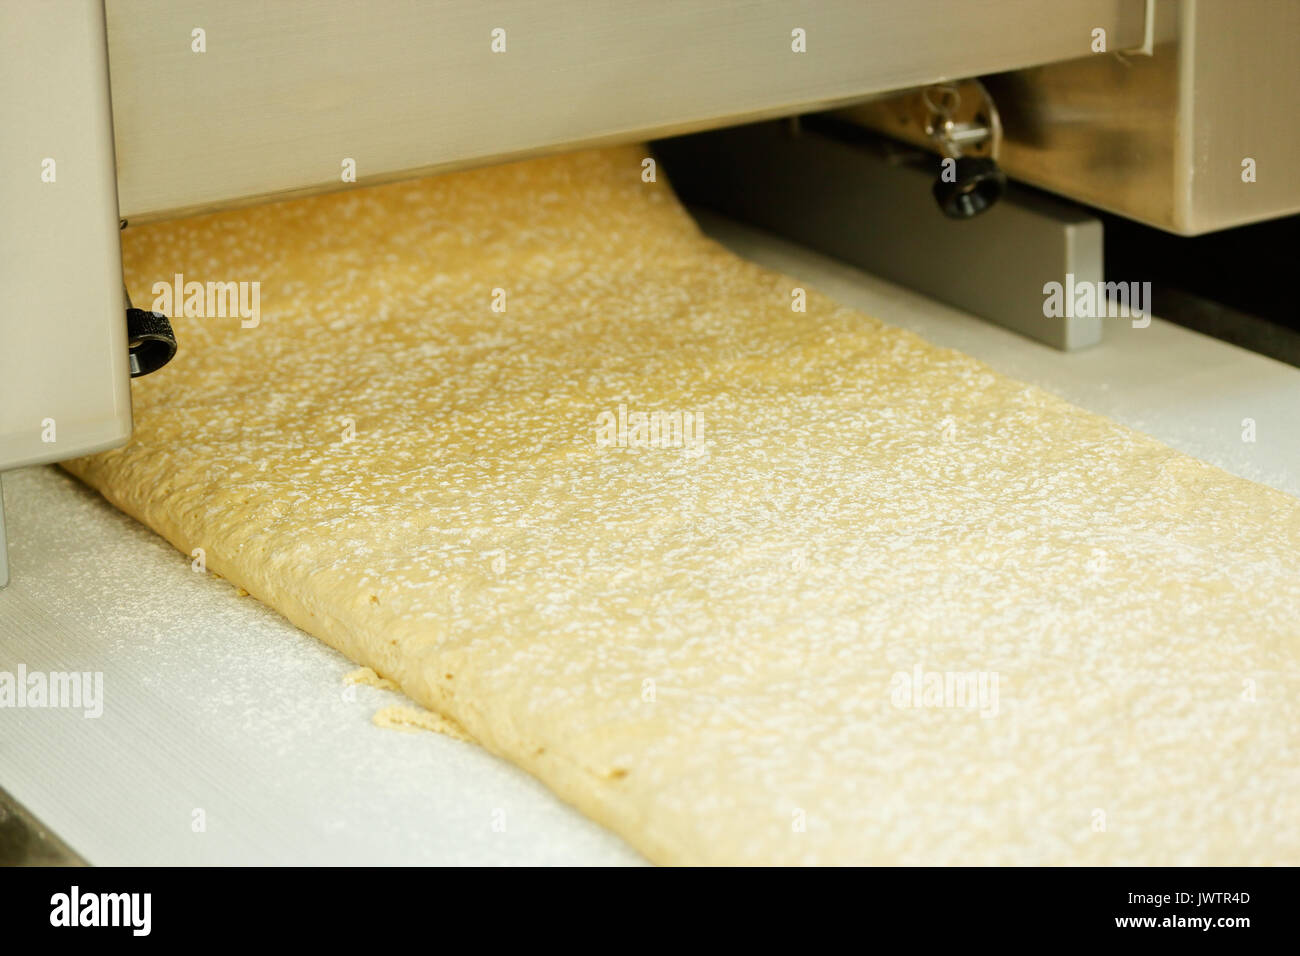 Dough sheeter machine produce continuous dough sheet. Selective focus. Stock Photo